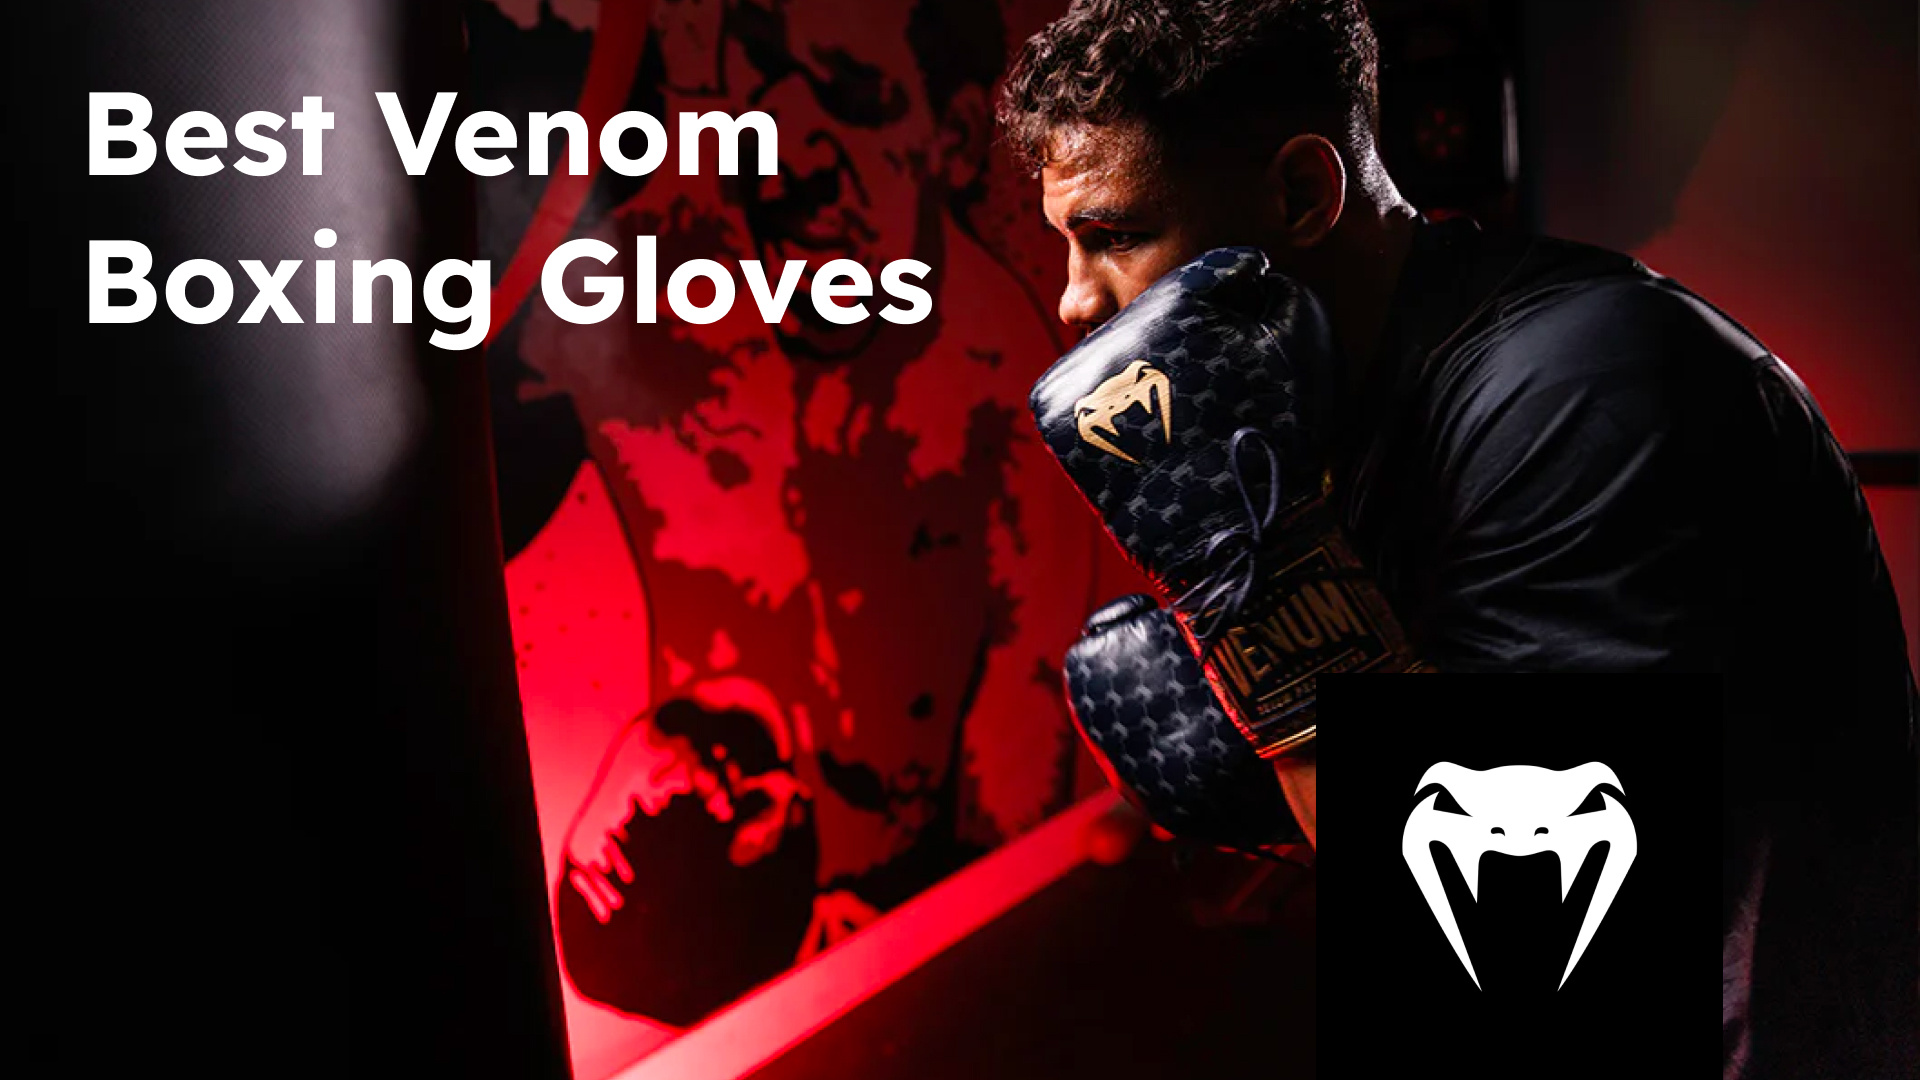 Boxer with premium Venom boxing gloves training in gym